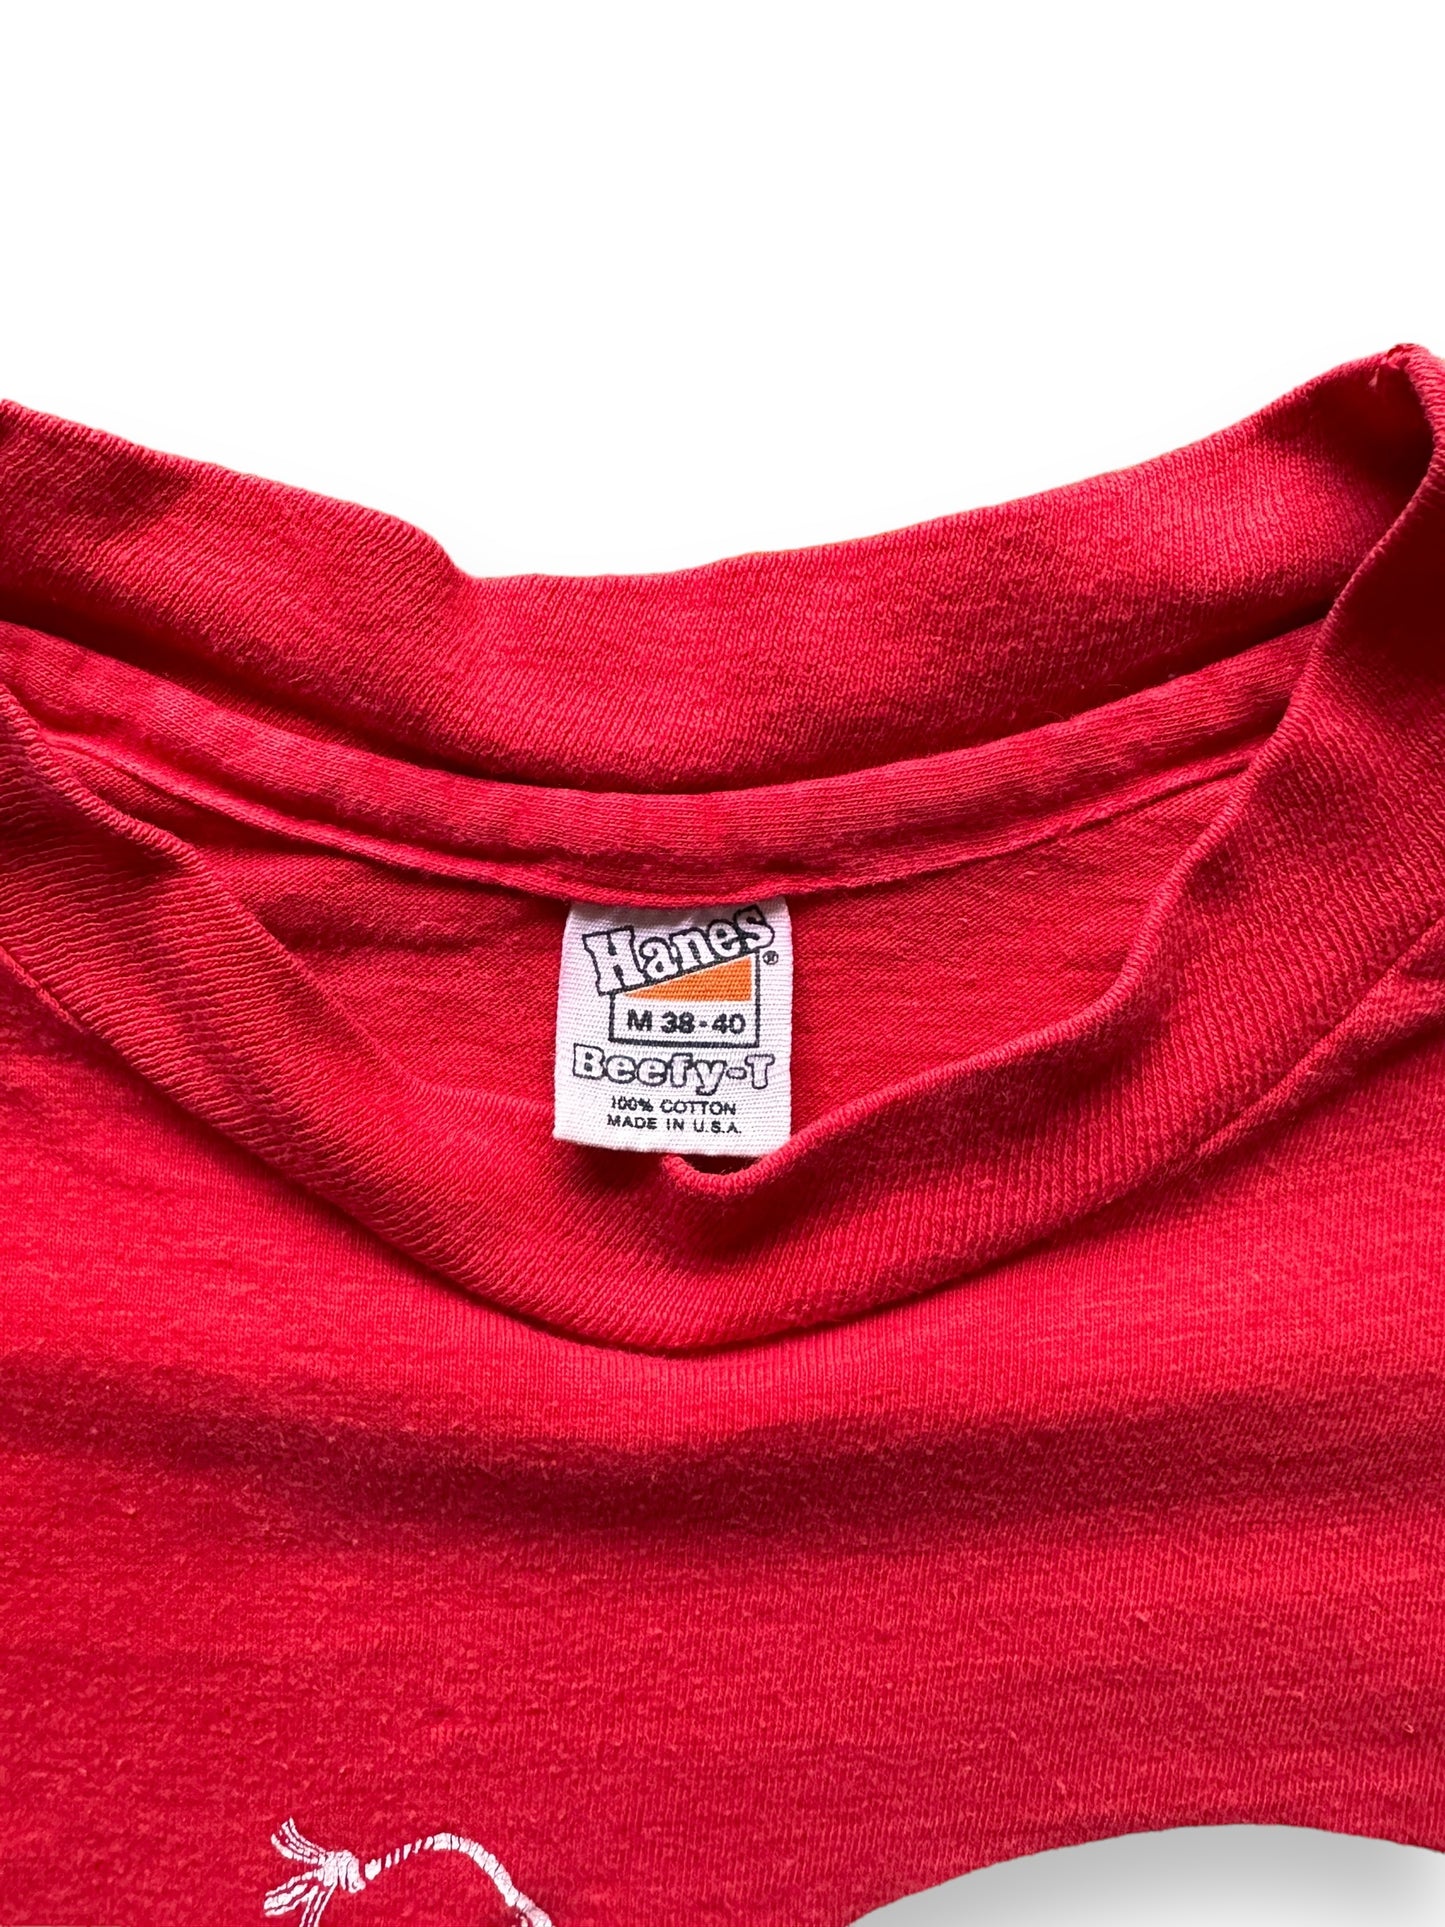 Tag View of Vintage Red Bah Humbug Christmas Tee SZ M | Vintage Scrooge T-Shirts Seattle | Barn Owl Vintage Clothing Seattle